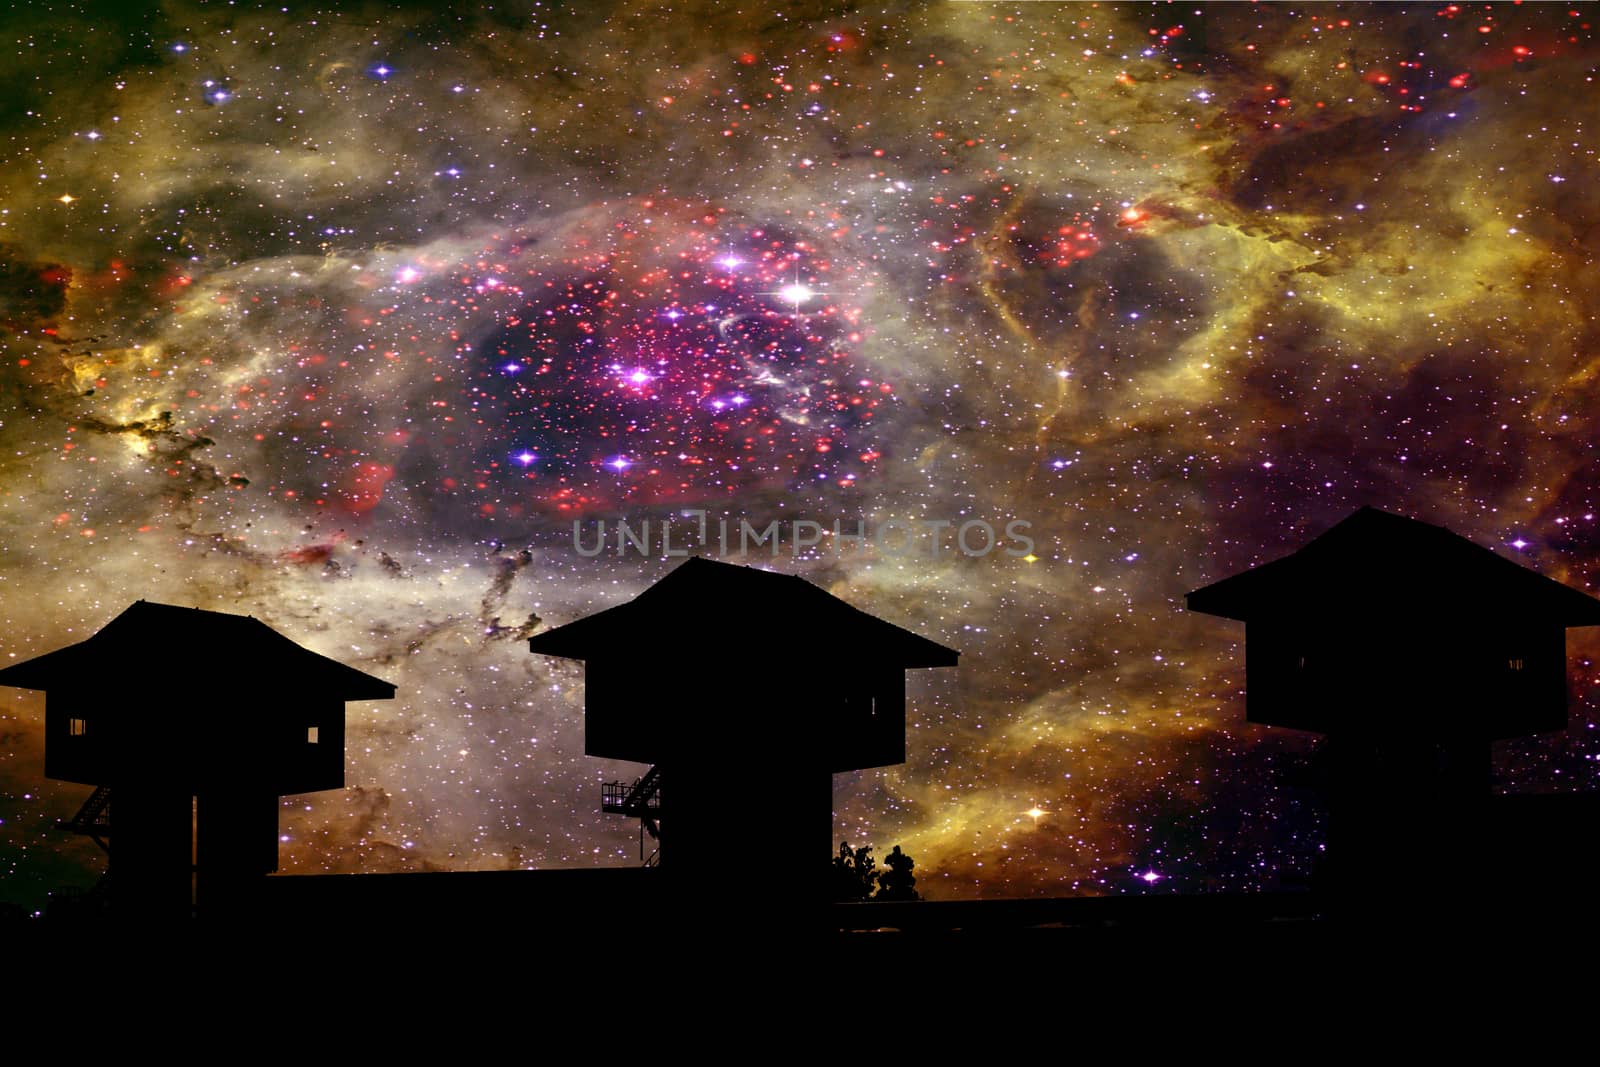 nebula and galaxy backand silhouette dam in the night sky by Darkfox